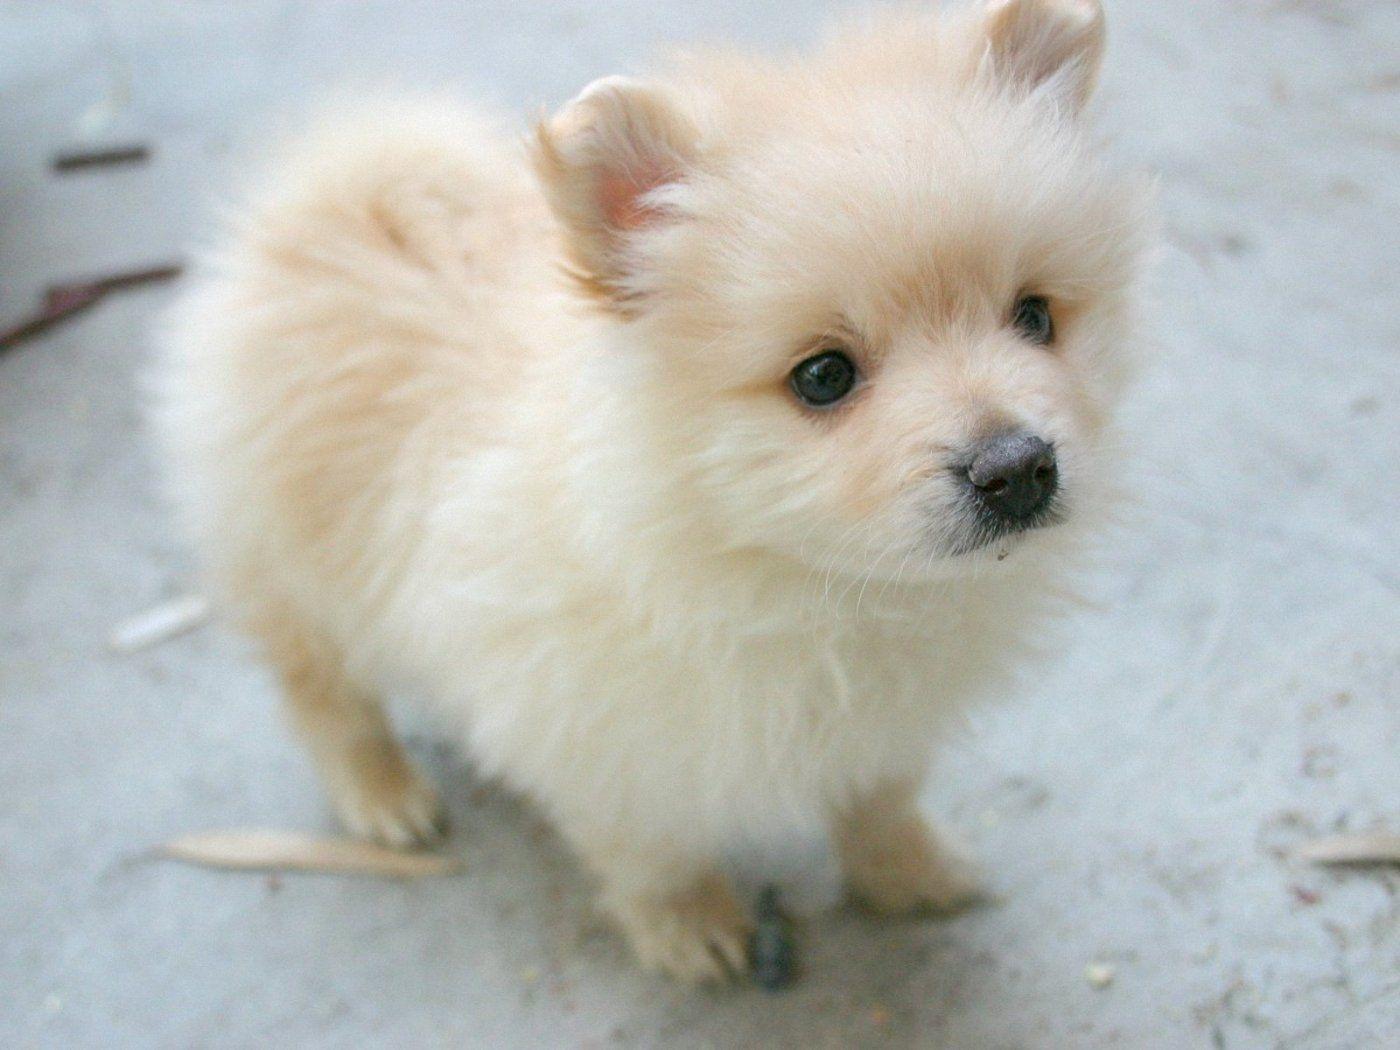 Cute Pomeranian dog photo and wallpaper. Beautiful Cute Pomeranian